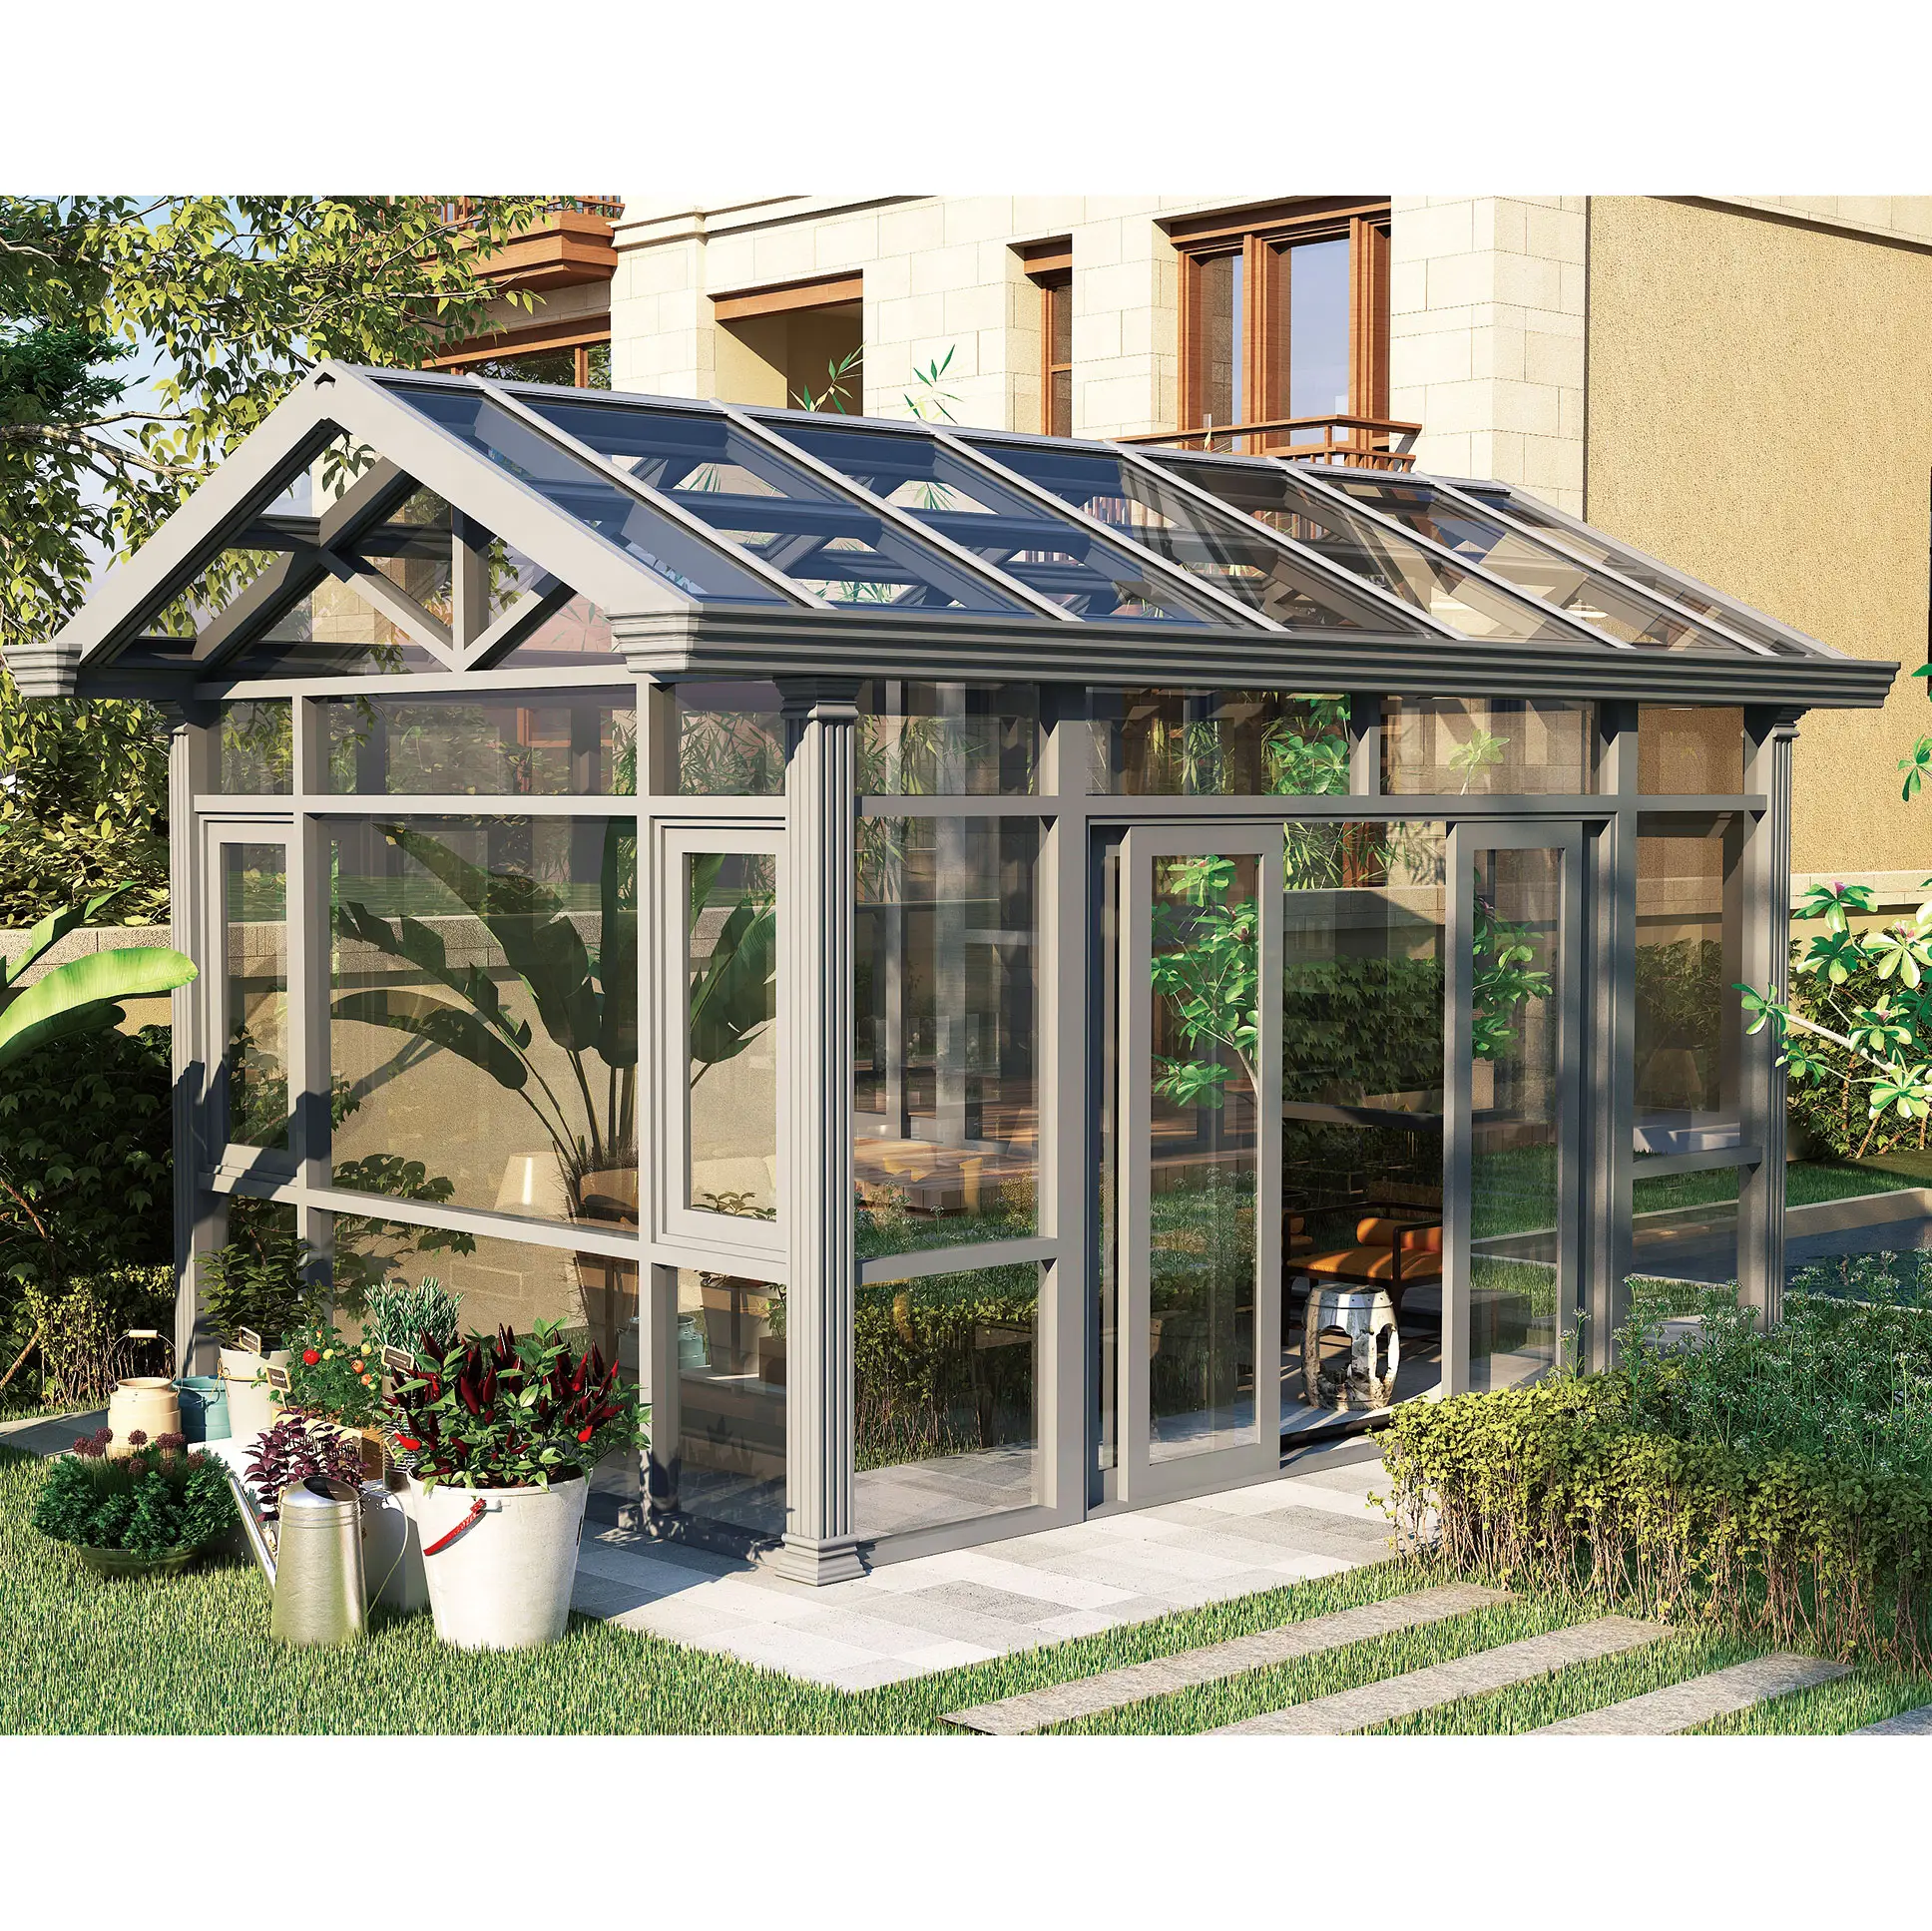 Sunroom modular de cristal de estilo europeo, casa exterior moderna, jardín, patio, Almuninm, sala de Sol de cristal de aleación